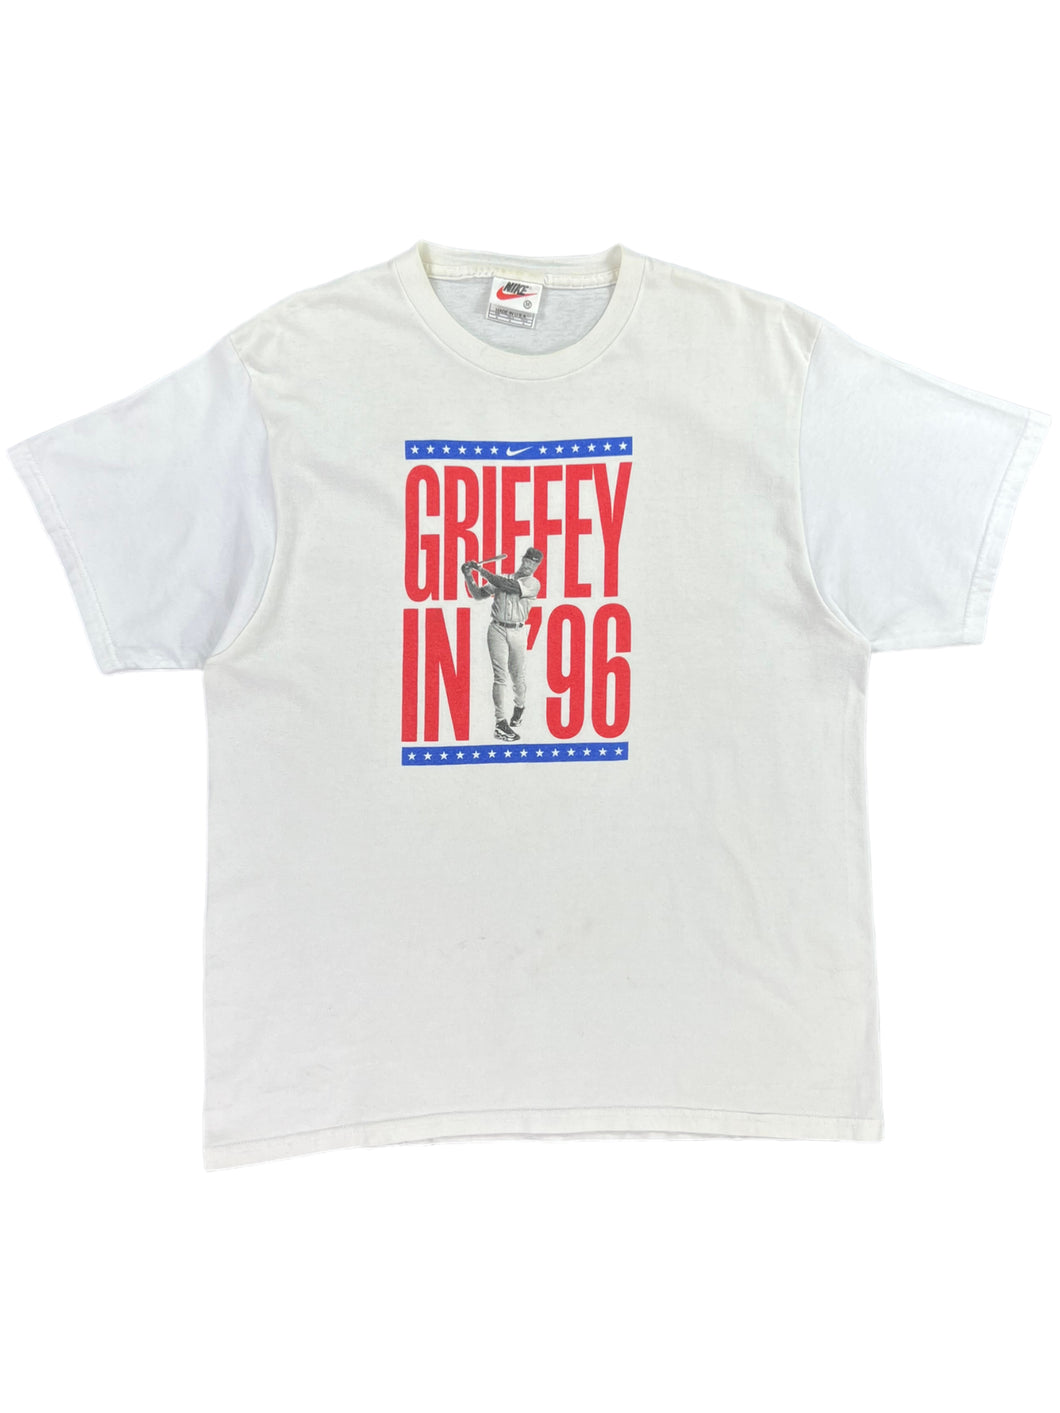 Vintage 1996 Nike Ken Griffey Jr. Griffey in ‘96 political campaign tee (M/L)